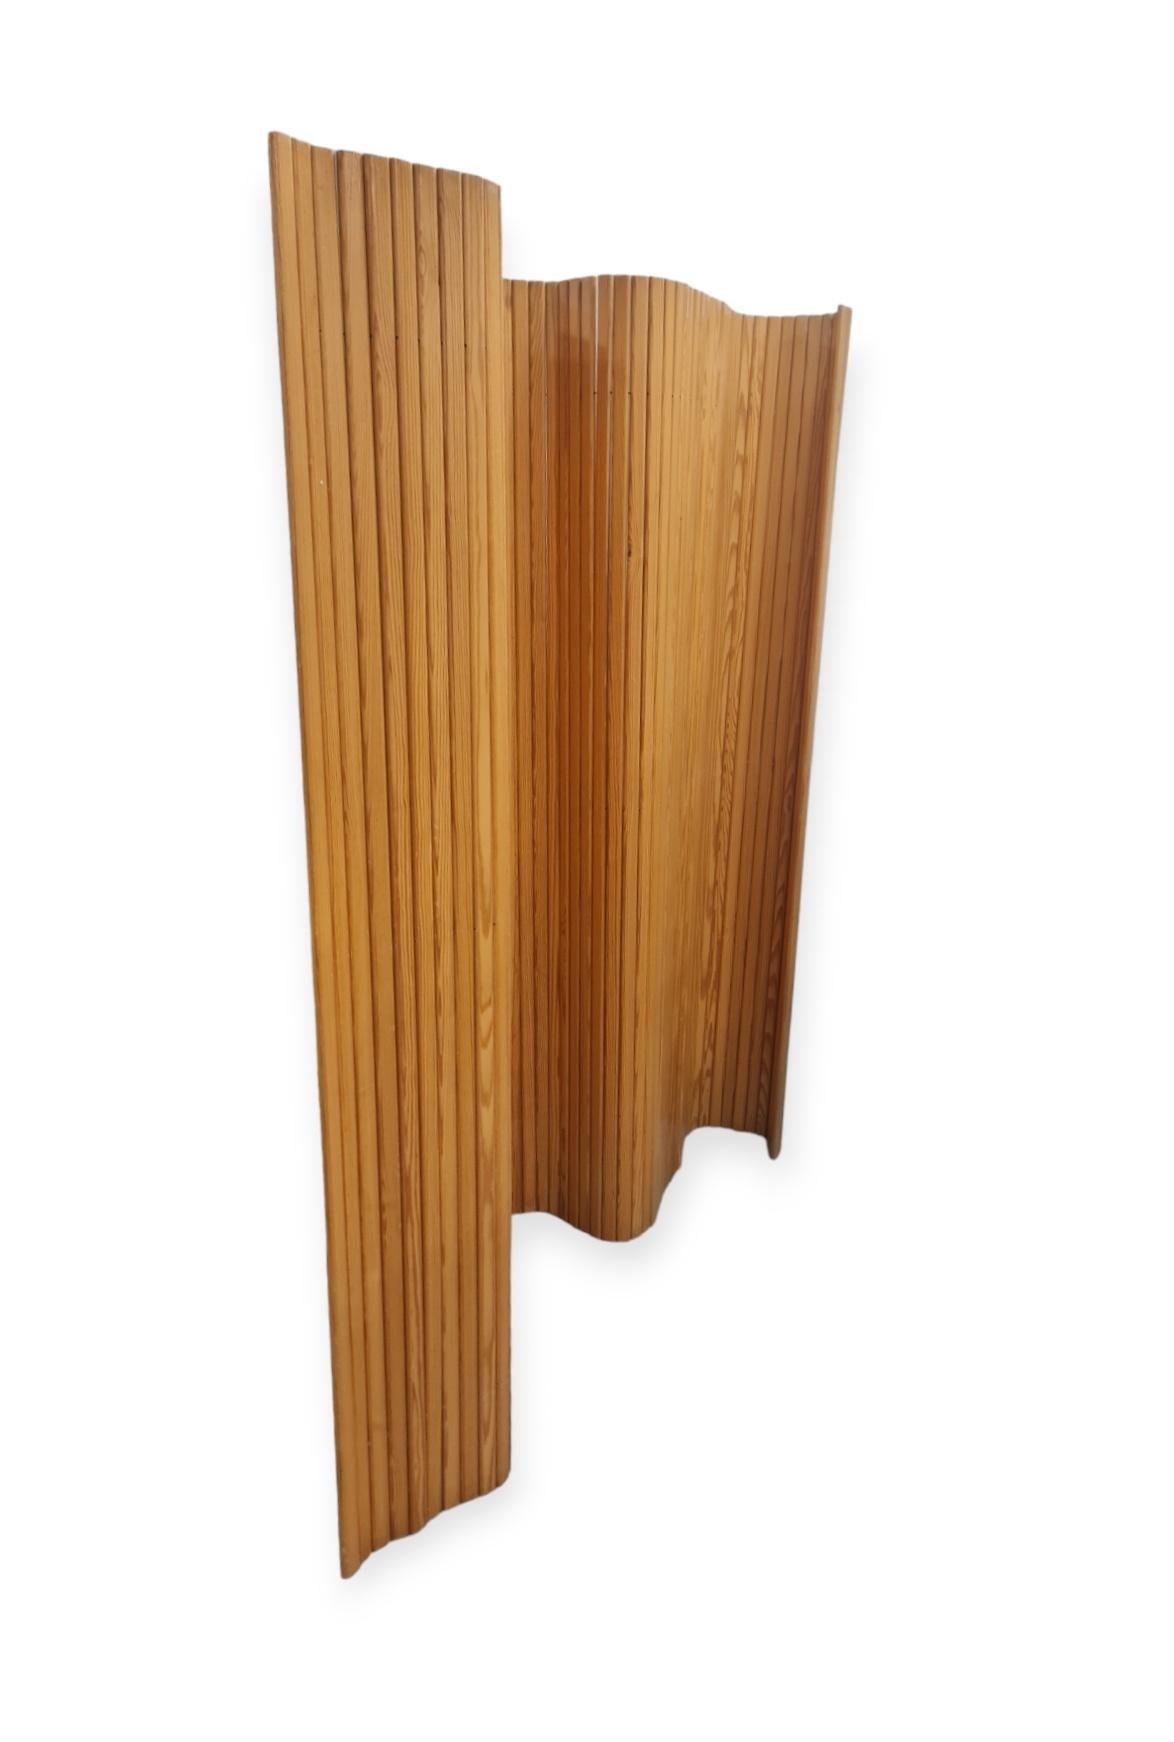 Alvar Aalto, Wooden Room Divider, Late 1960s, Artek For Sale 4